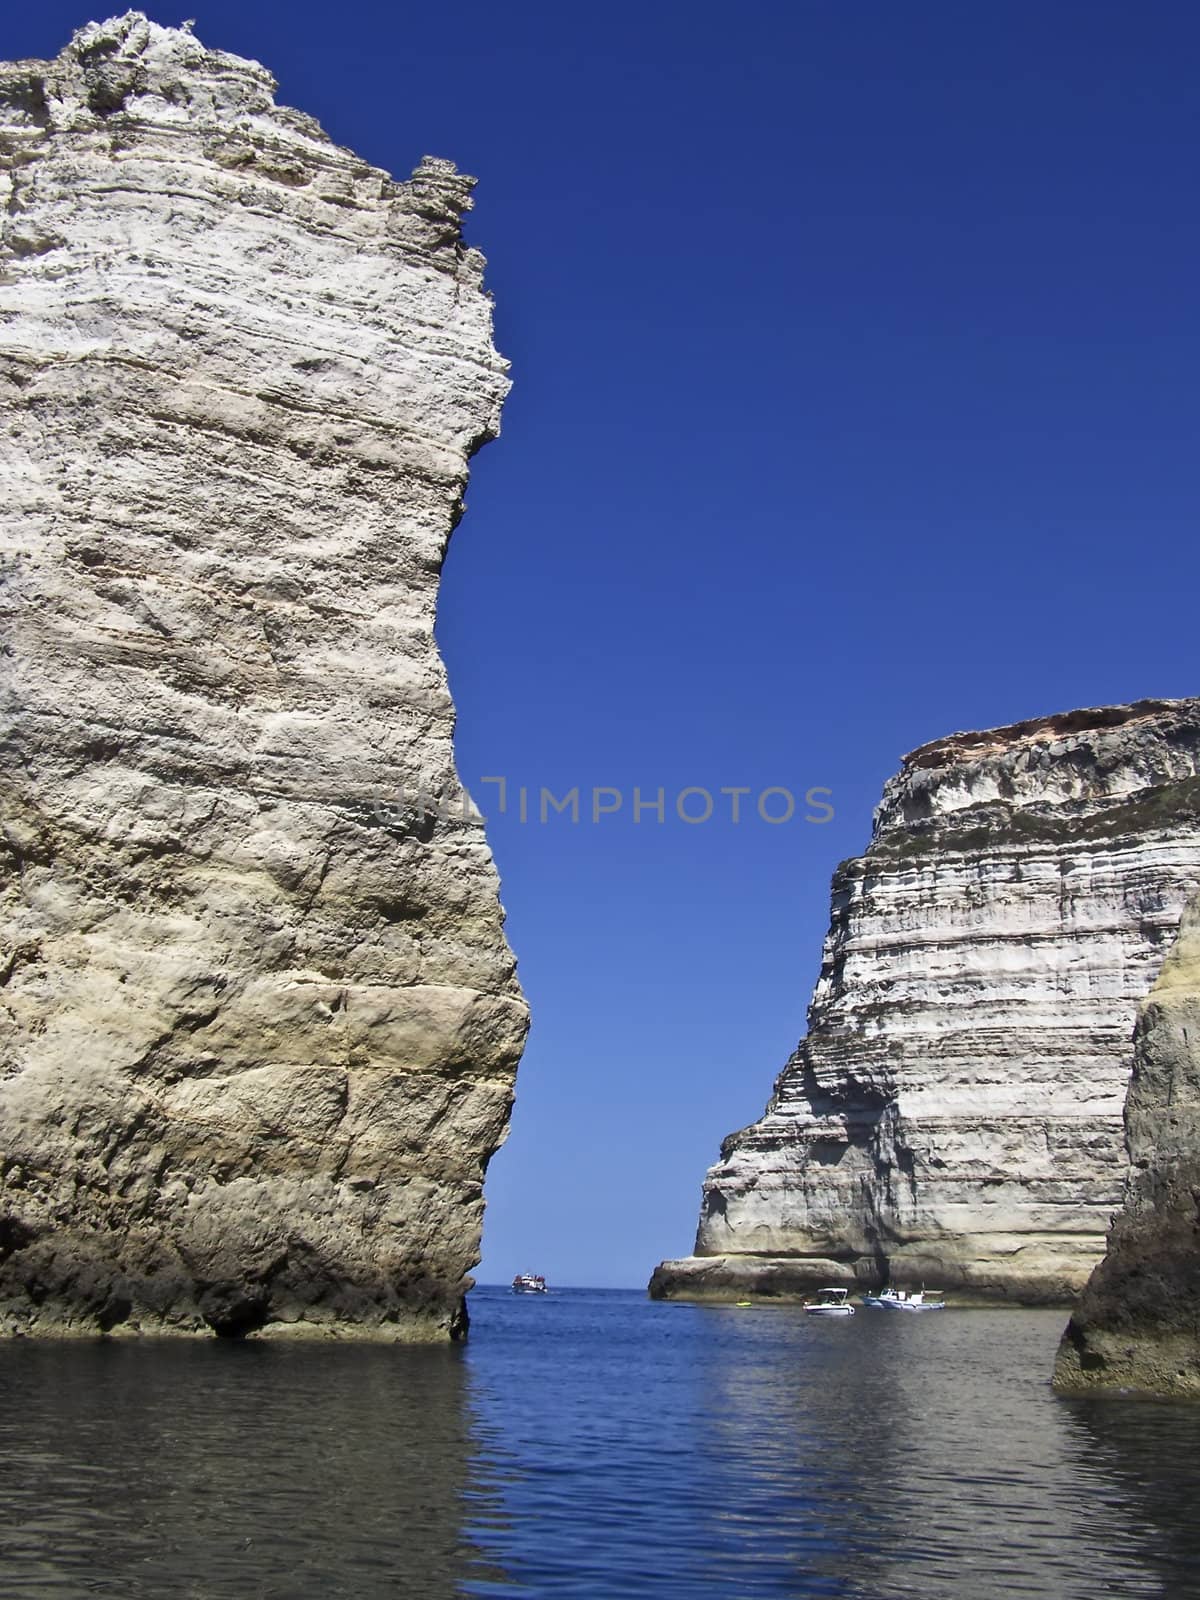 rocky island of Lampedusa by gandolfocannatella